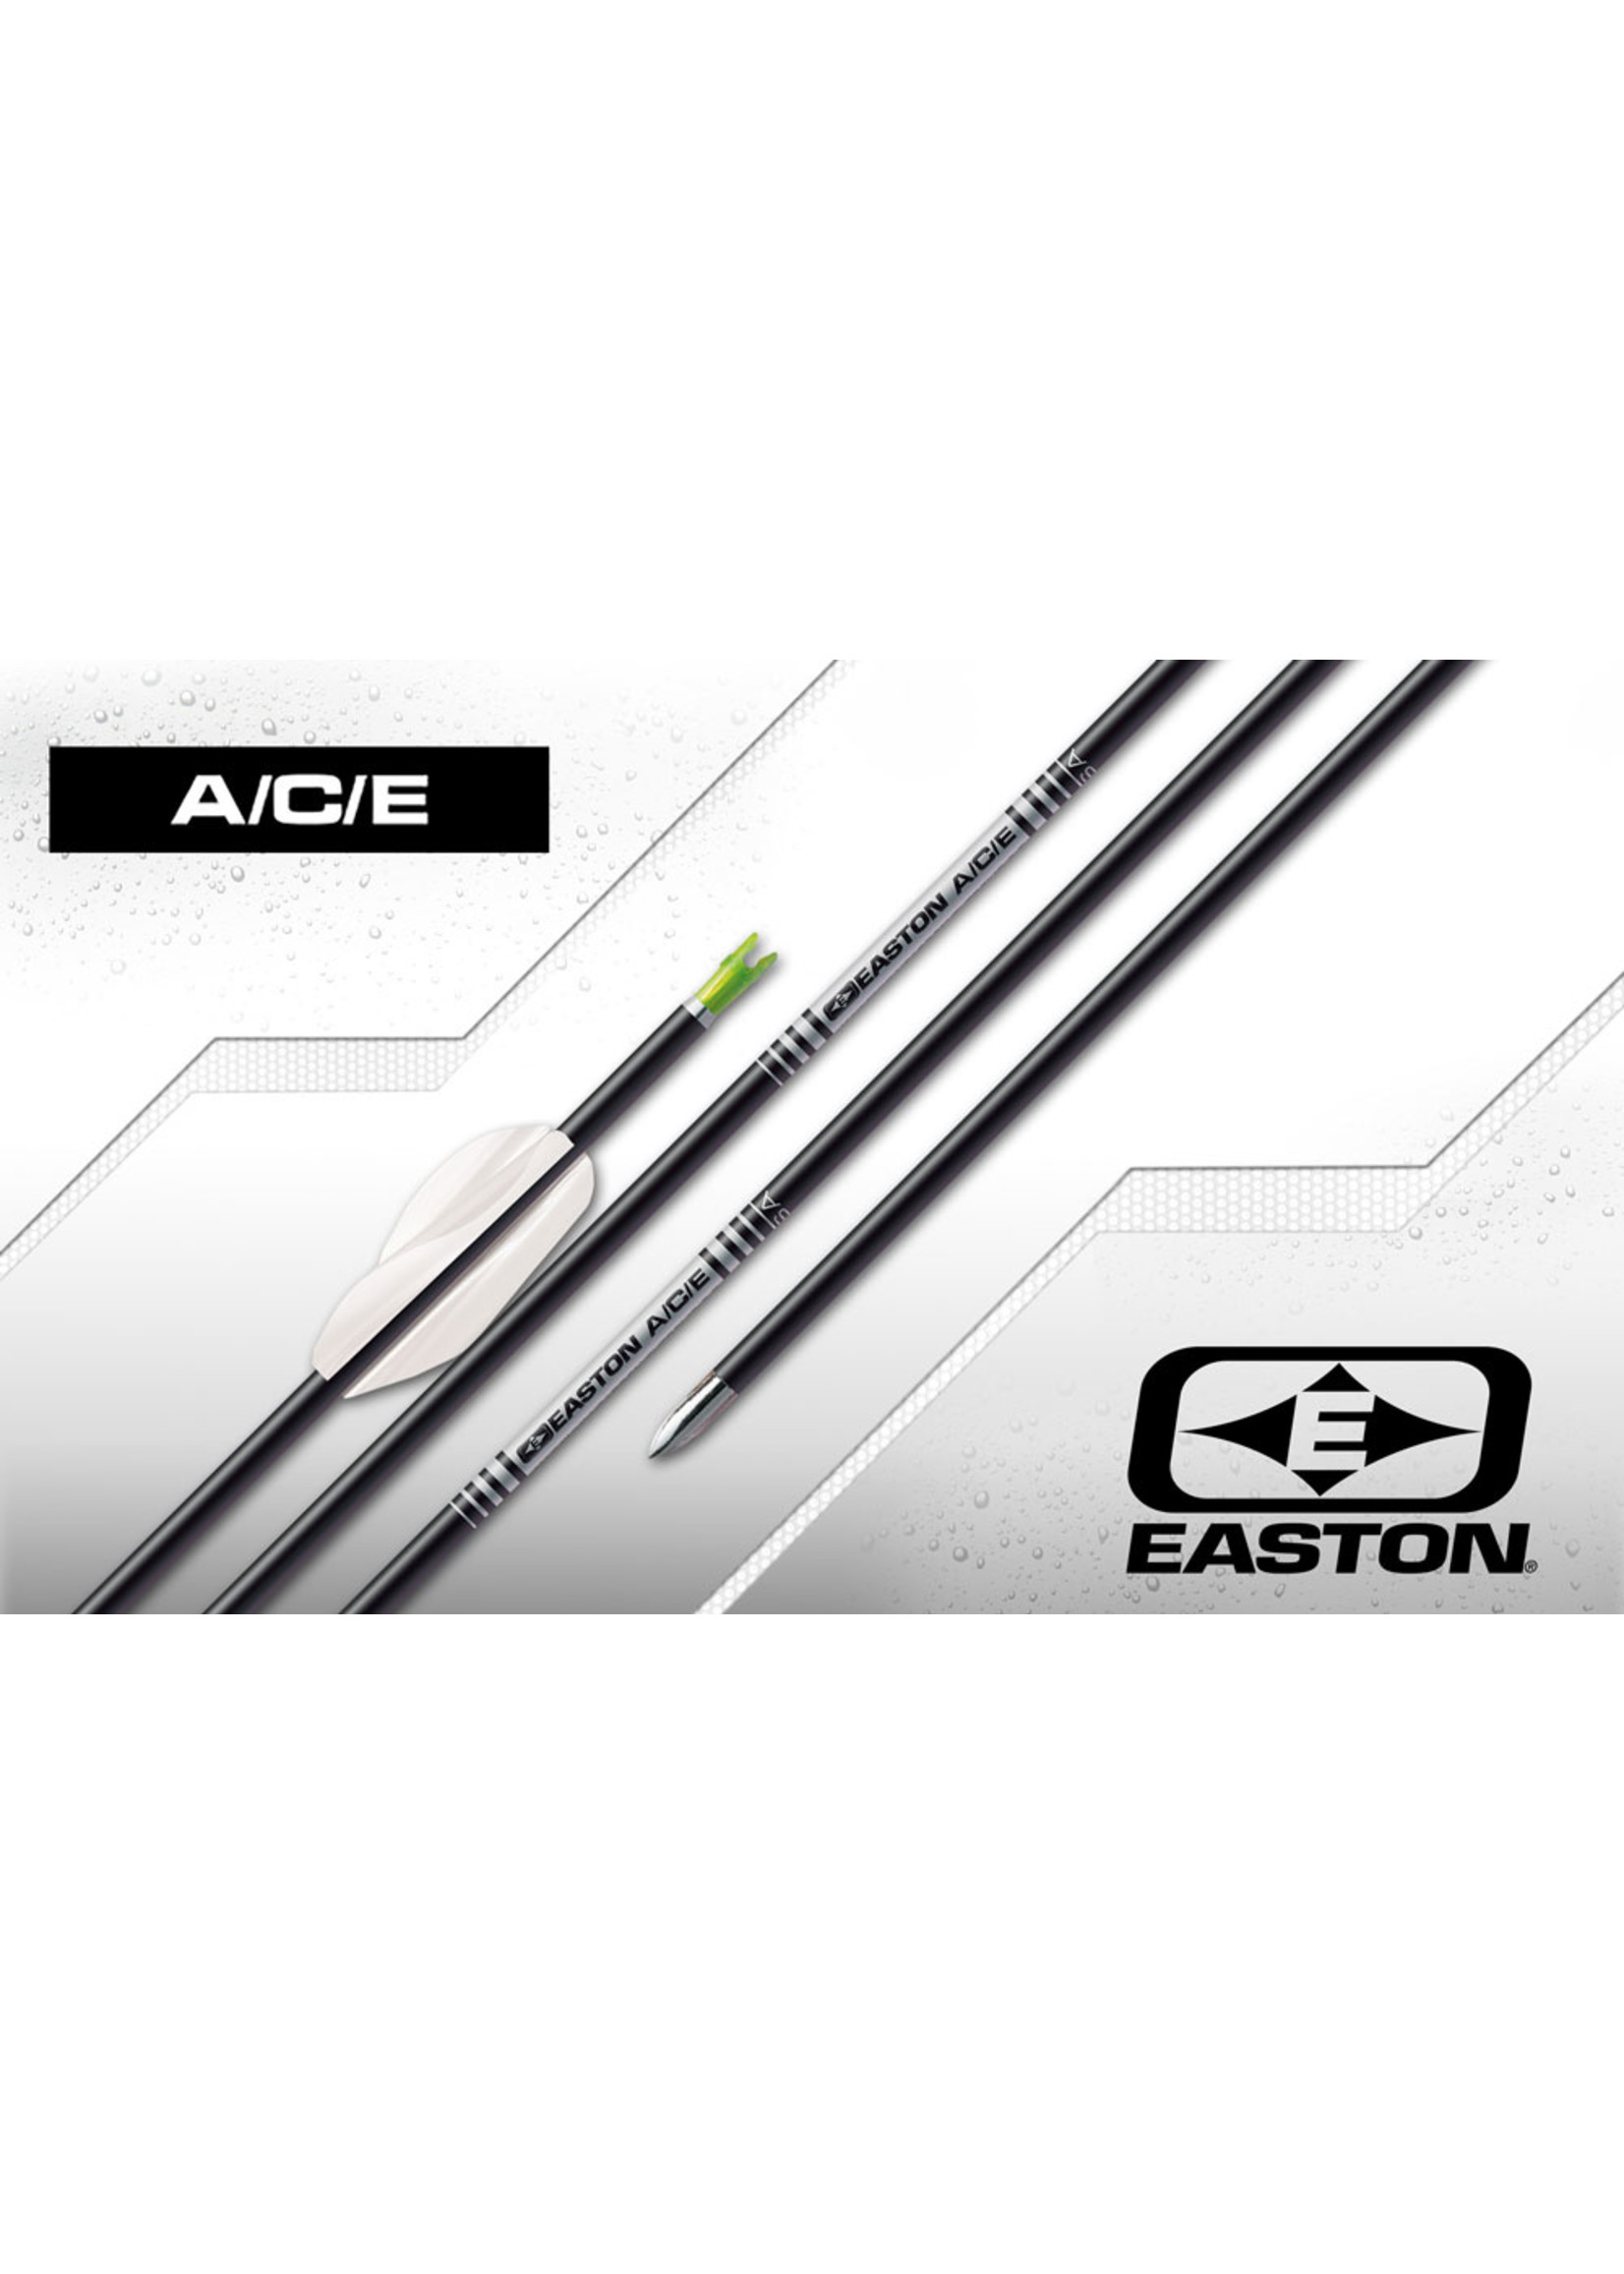 Easton Archery Easton A/C/E Shafts